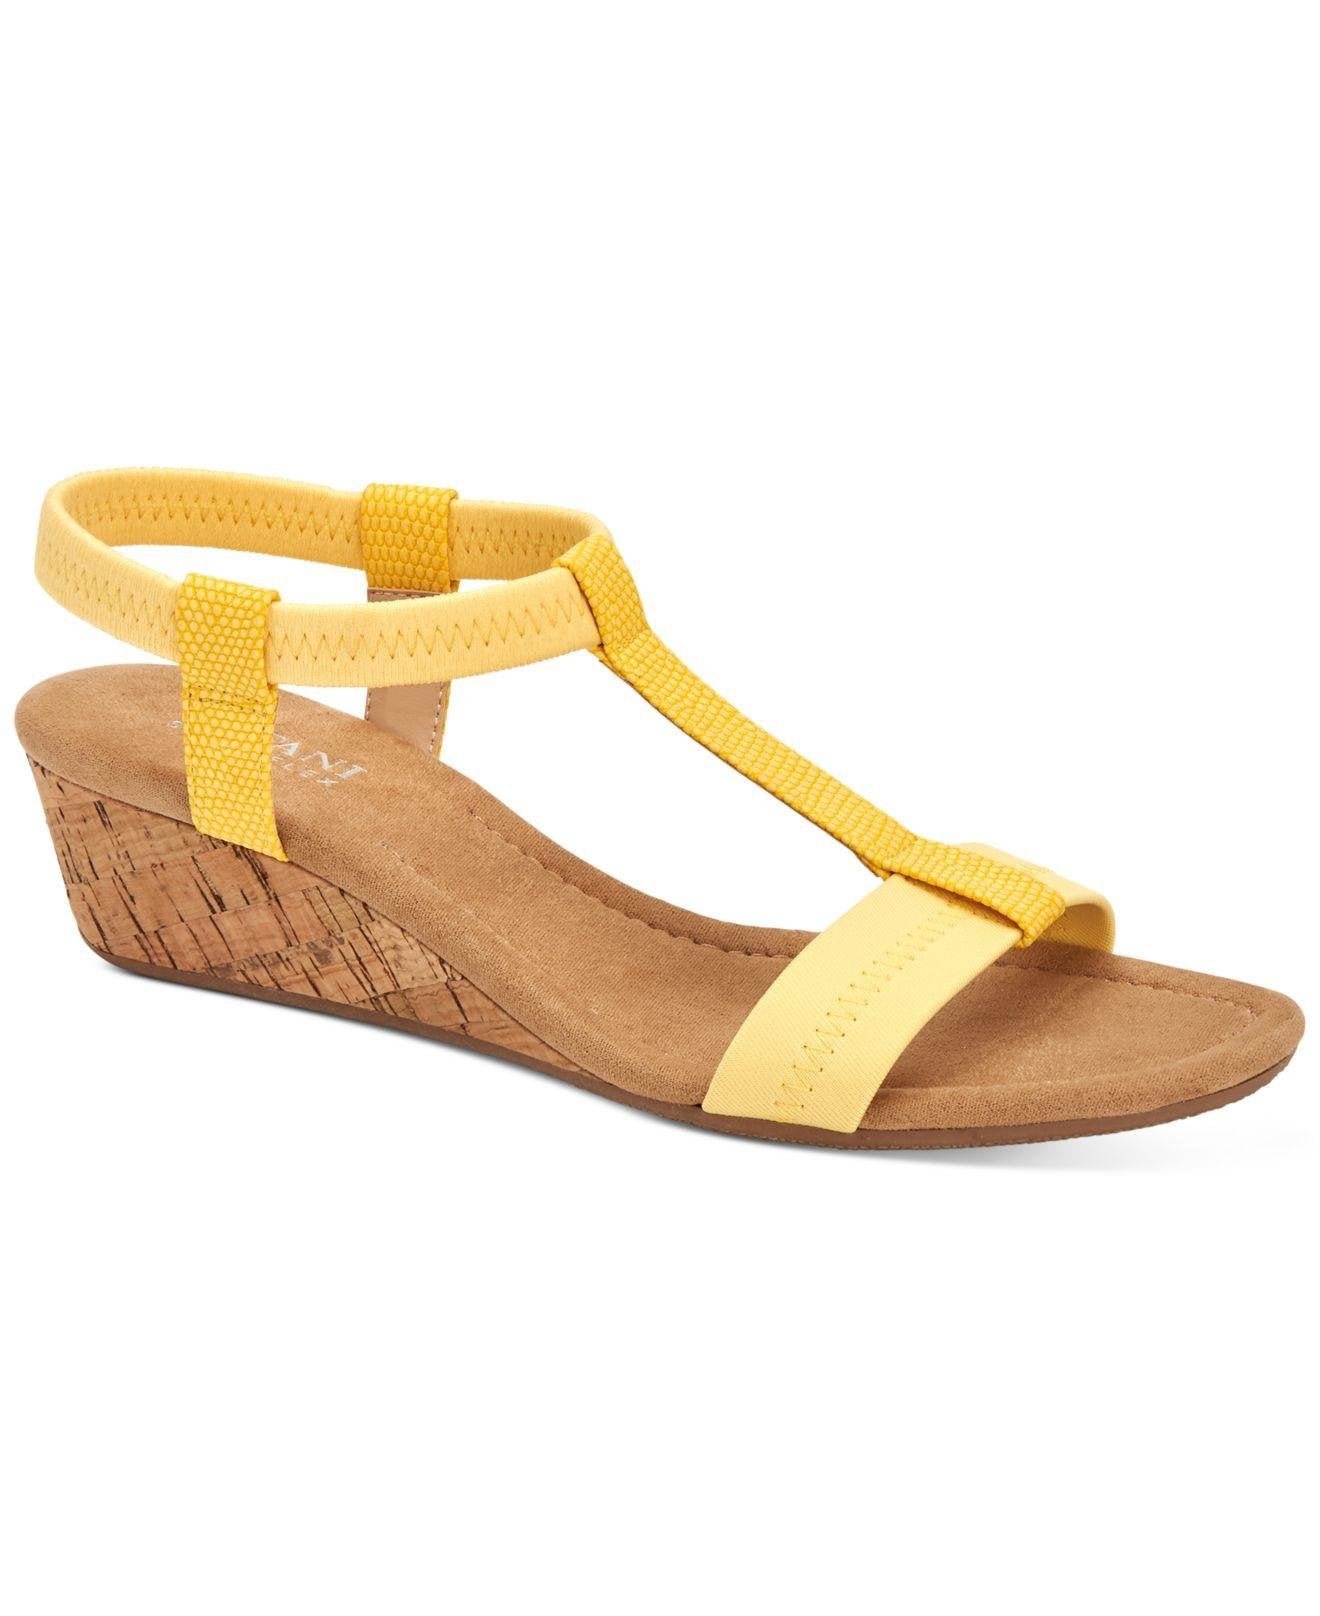 ALFANI Womens Yellow Cork-Like Elastic Ankle Strap Cushioned Voyage Round Toe Wedge Slip On Dress Sandals Shoes 12 M